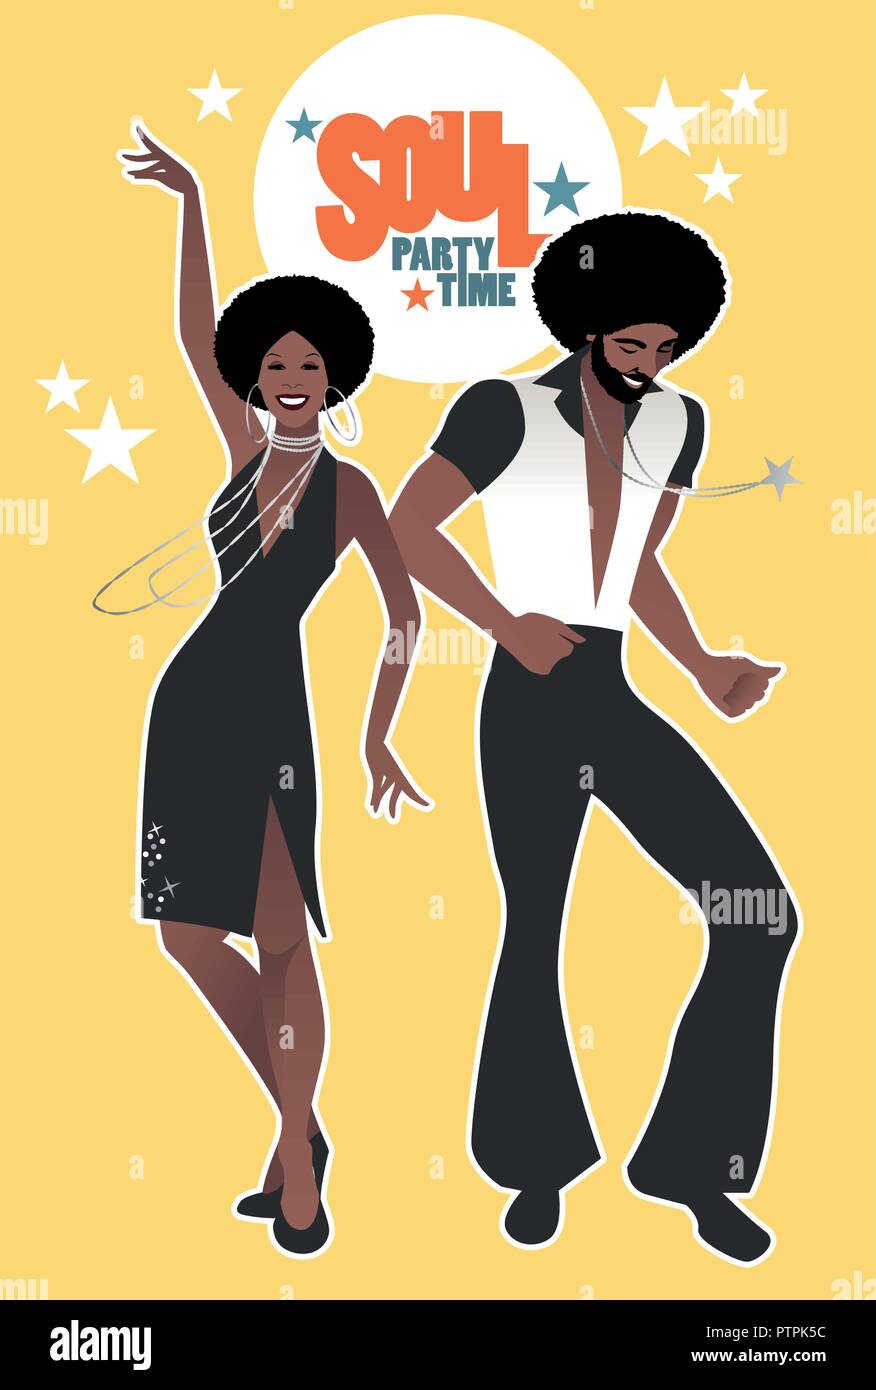 https://c8.alamy.com/comp/PTPK5C/soul-party-time-young-couple-dancing-soul-funk-or-disco-retro-style-PTPK5C.jpg